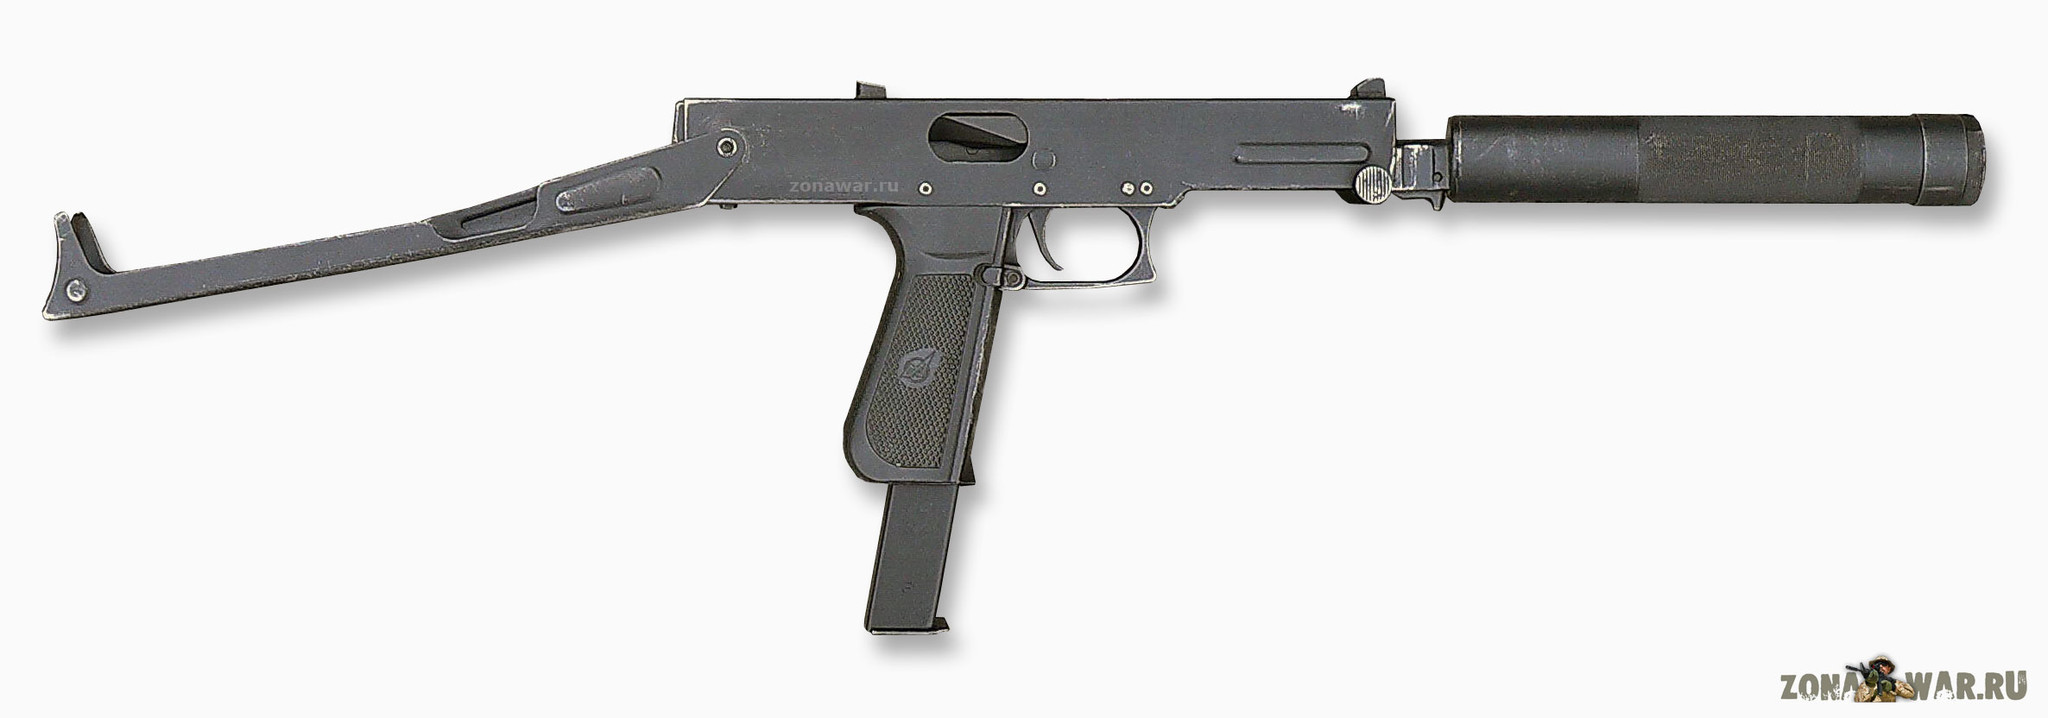 PP-93 submachine gun